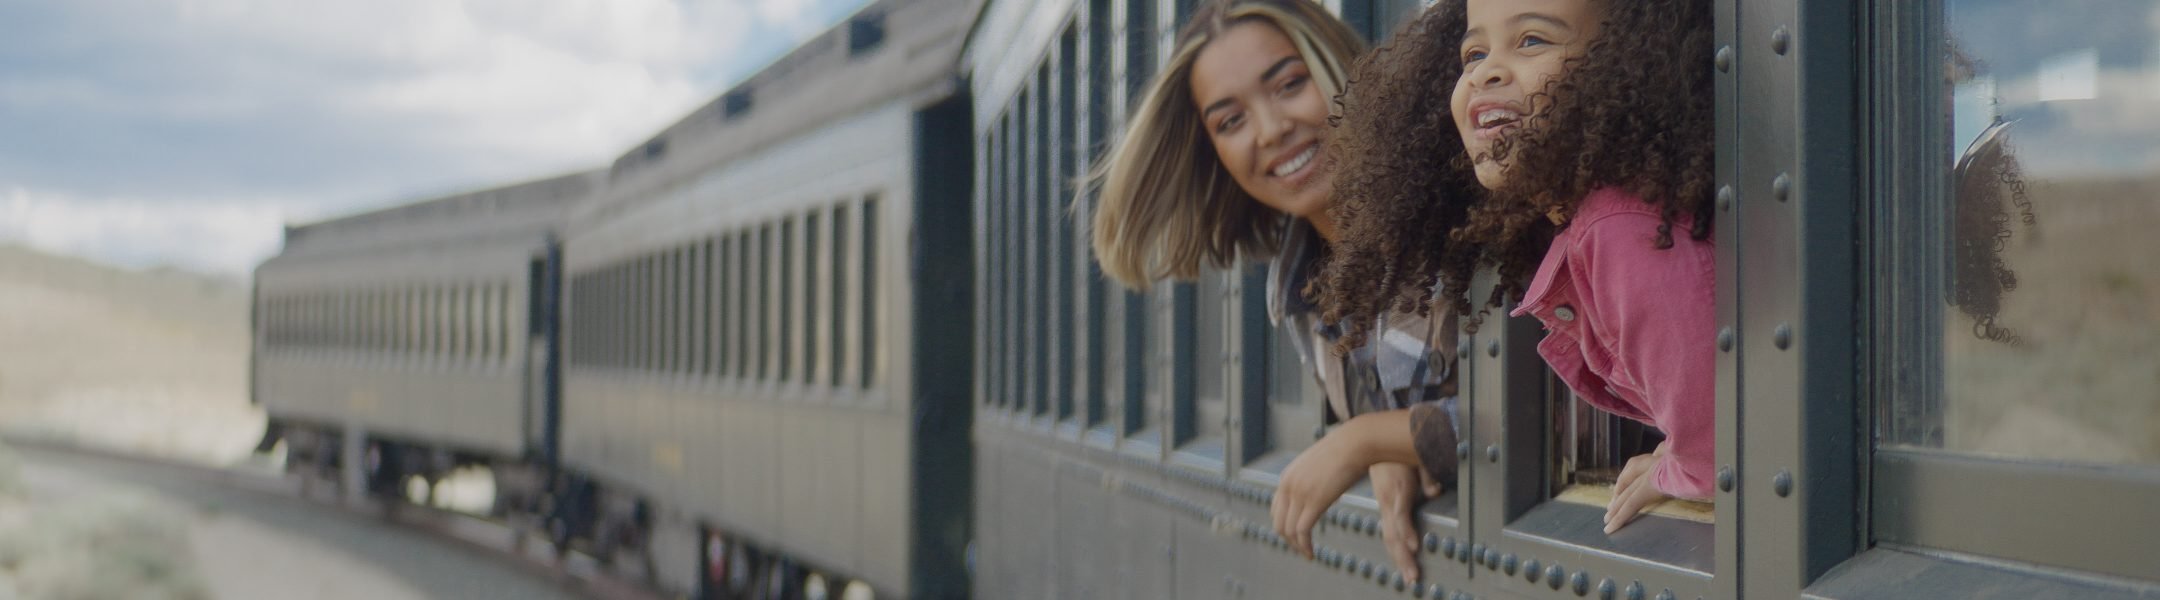 Train Ride, Train, V&T, VCC Summer Commercial